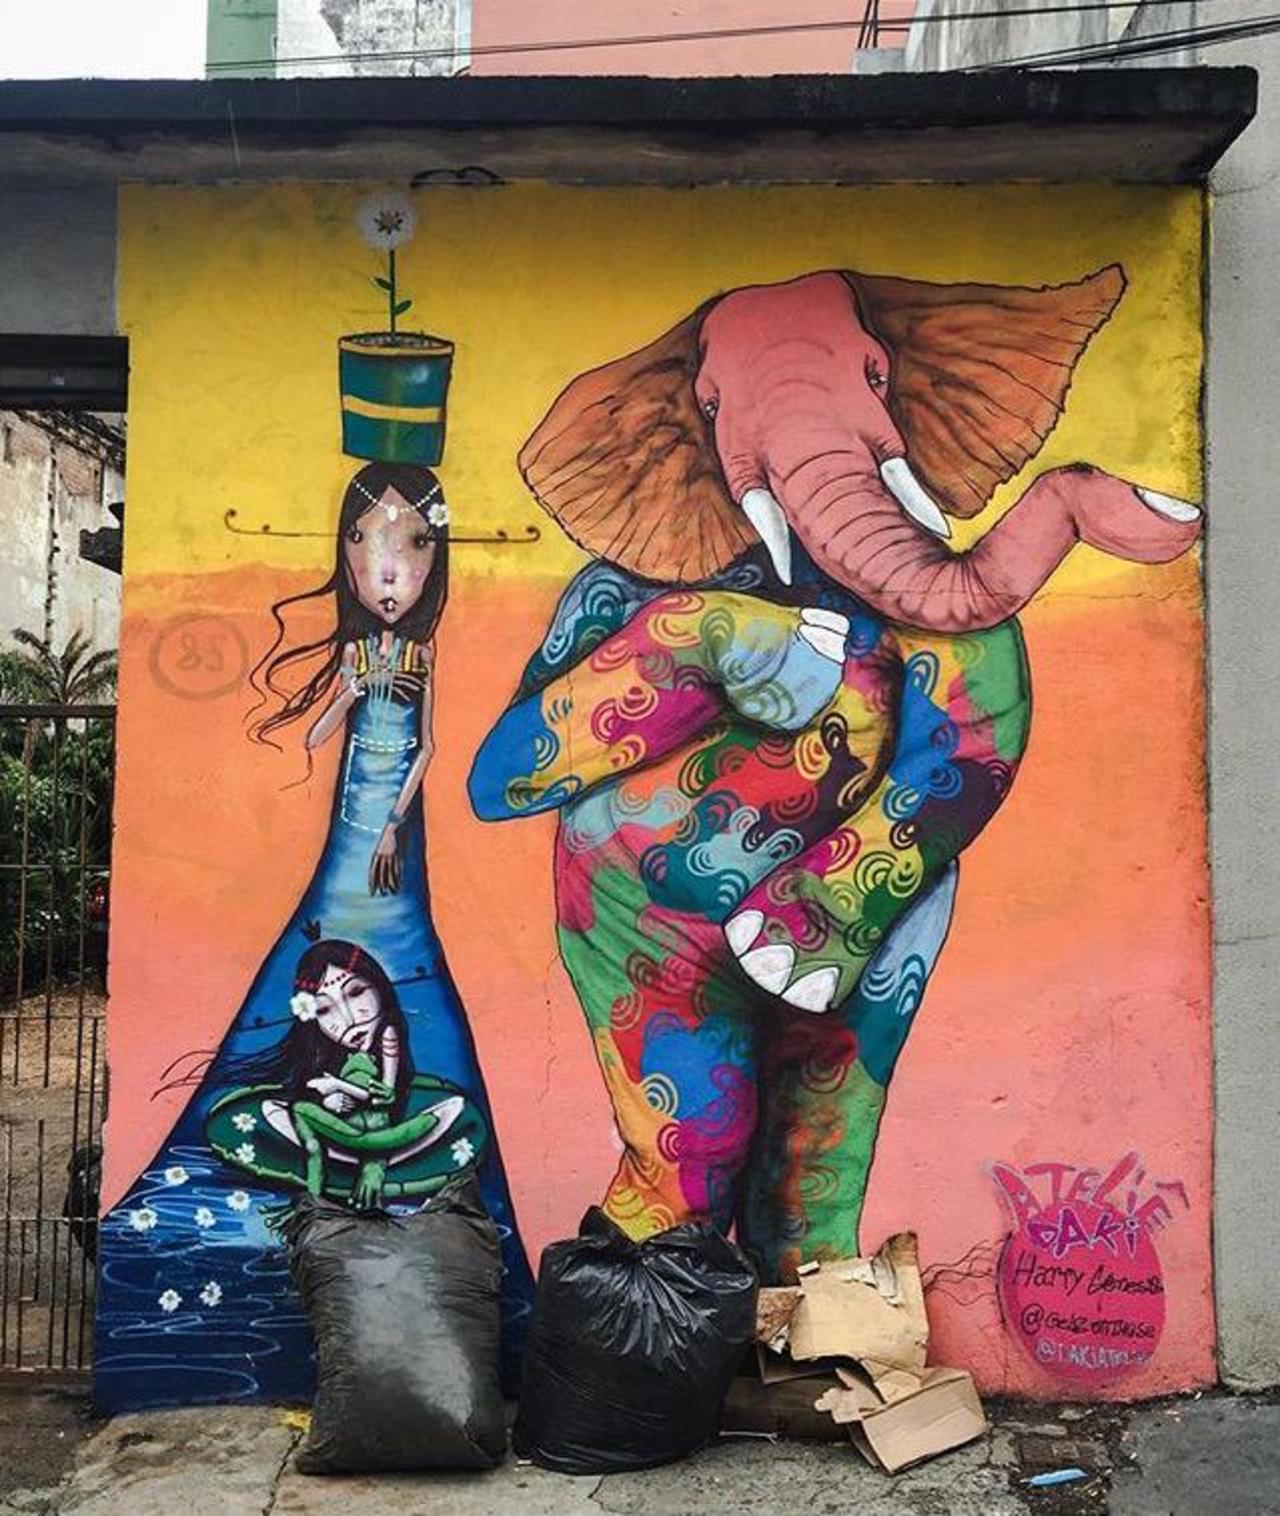 Street Art by Harry Geneis & Gelson in São Paulo #art #mural #graffiti #streetart http://t.co/SlLbhuMZfD … … …… … http://twitter.com/charlesjackso14/status/648021498851139584